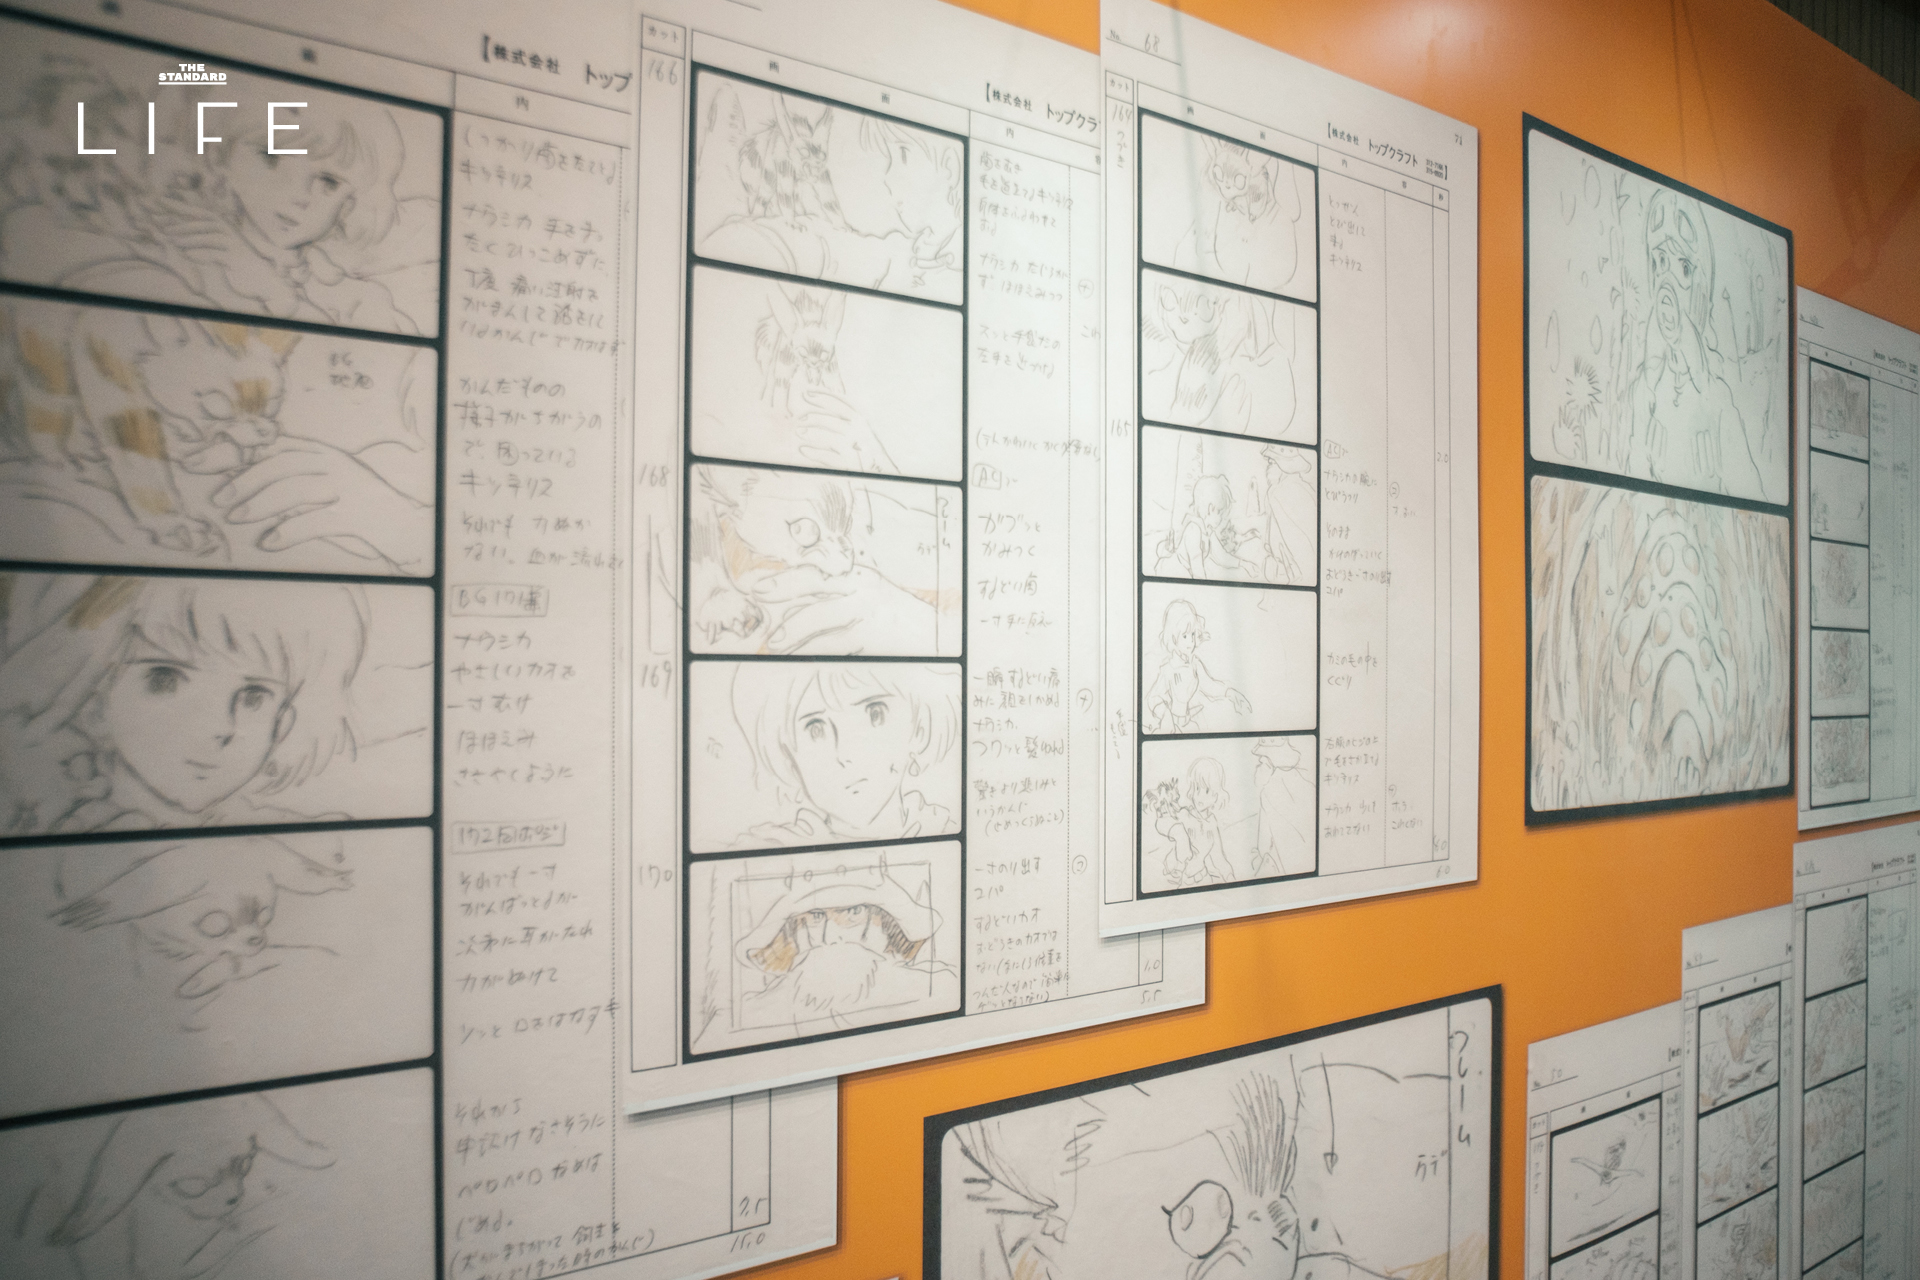 The World of Studio Ghibli’s Animation Exhibition Bangkok 2023